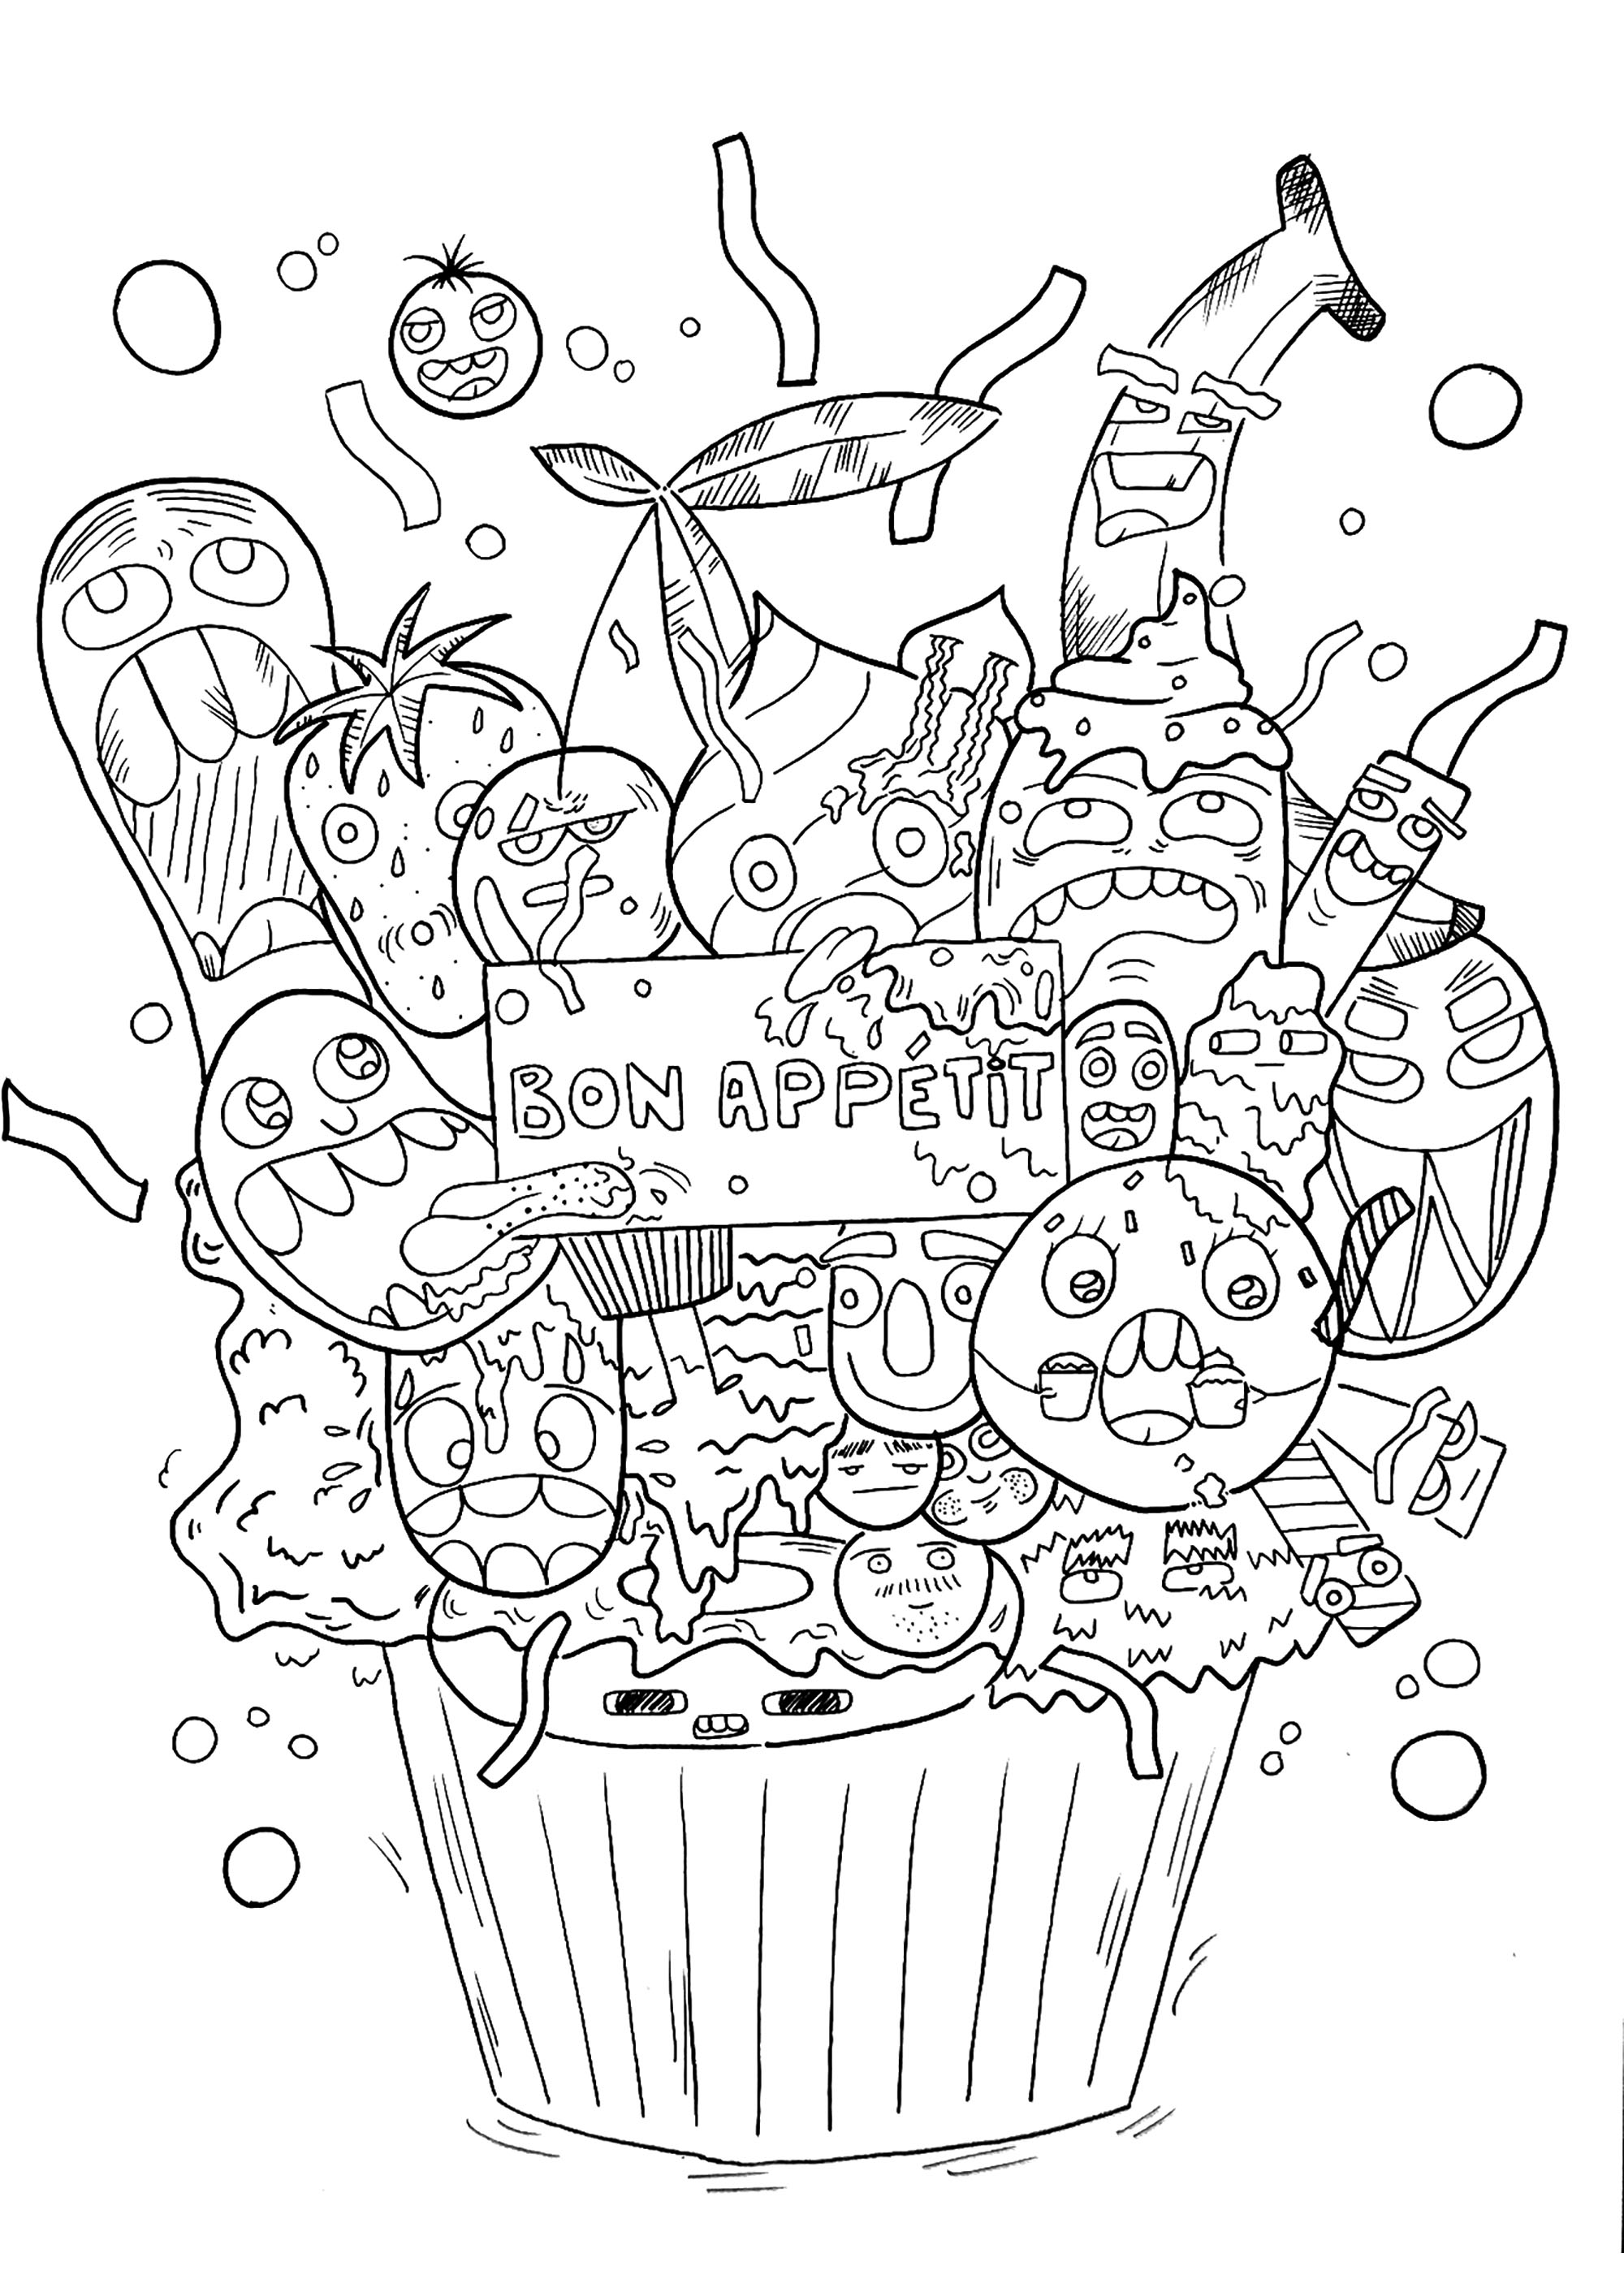 Download Doodle cupcake - Doodle Art / Doodling Adult Coloring Pages